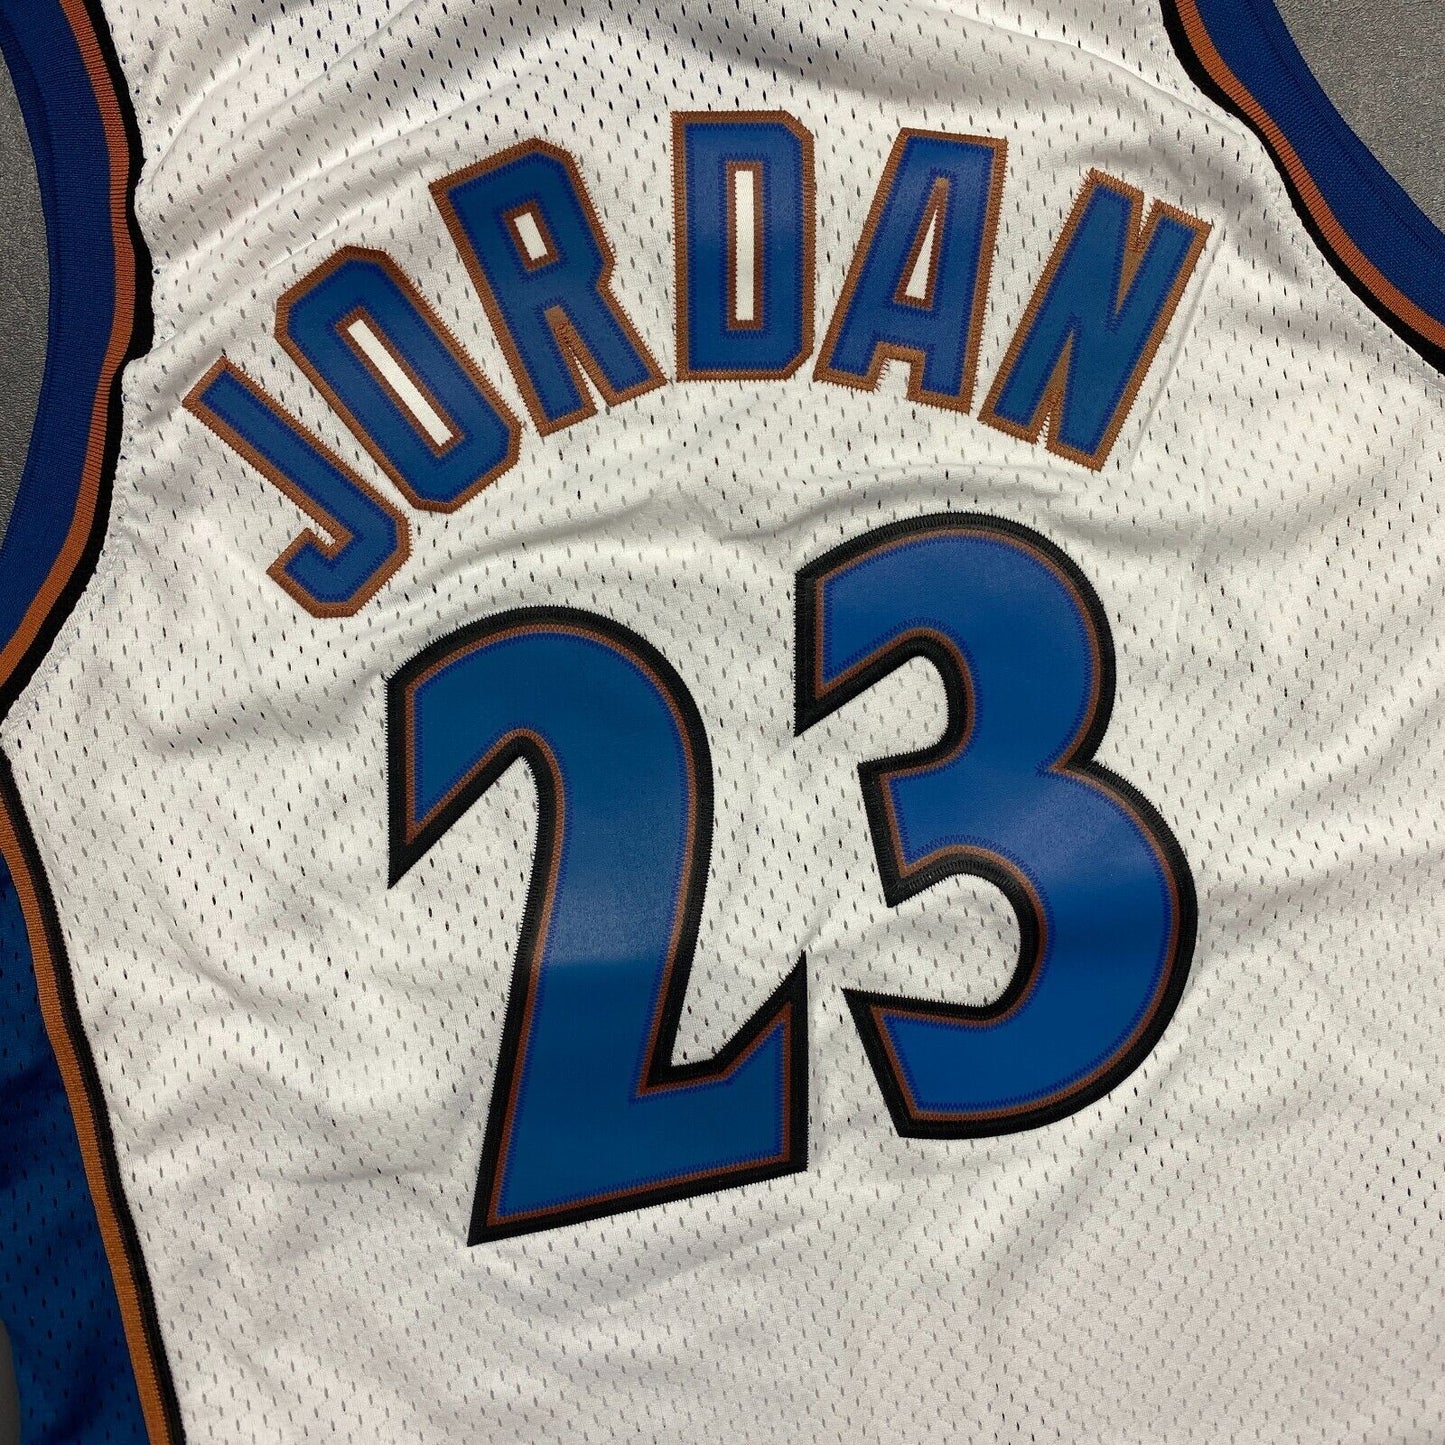 100% Authentic Michael Jordan Vintage Nike Washington Wizards Jersey Size L 911